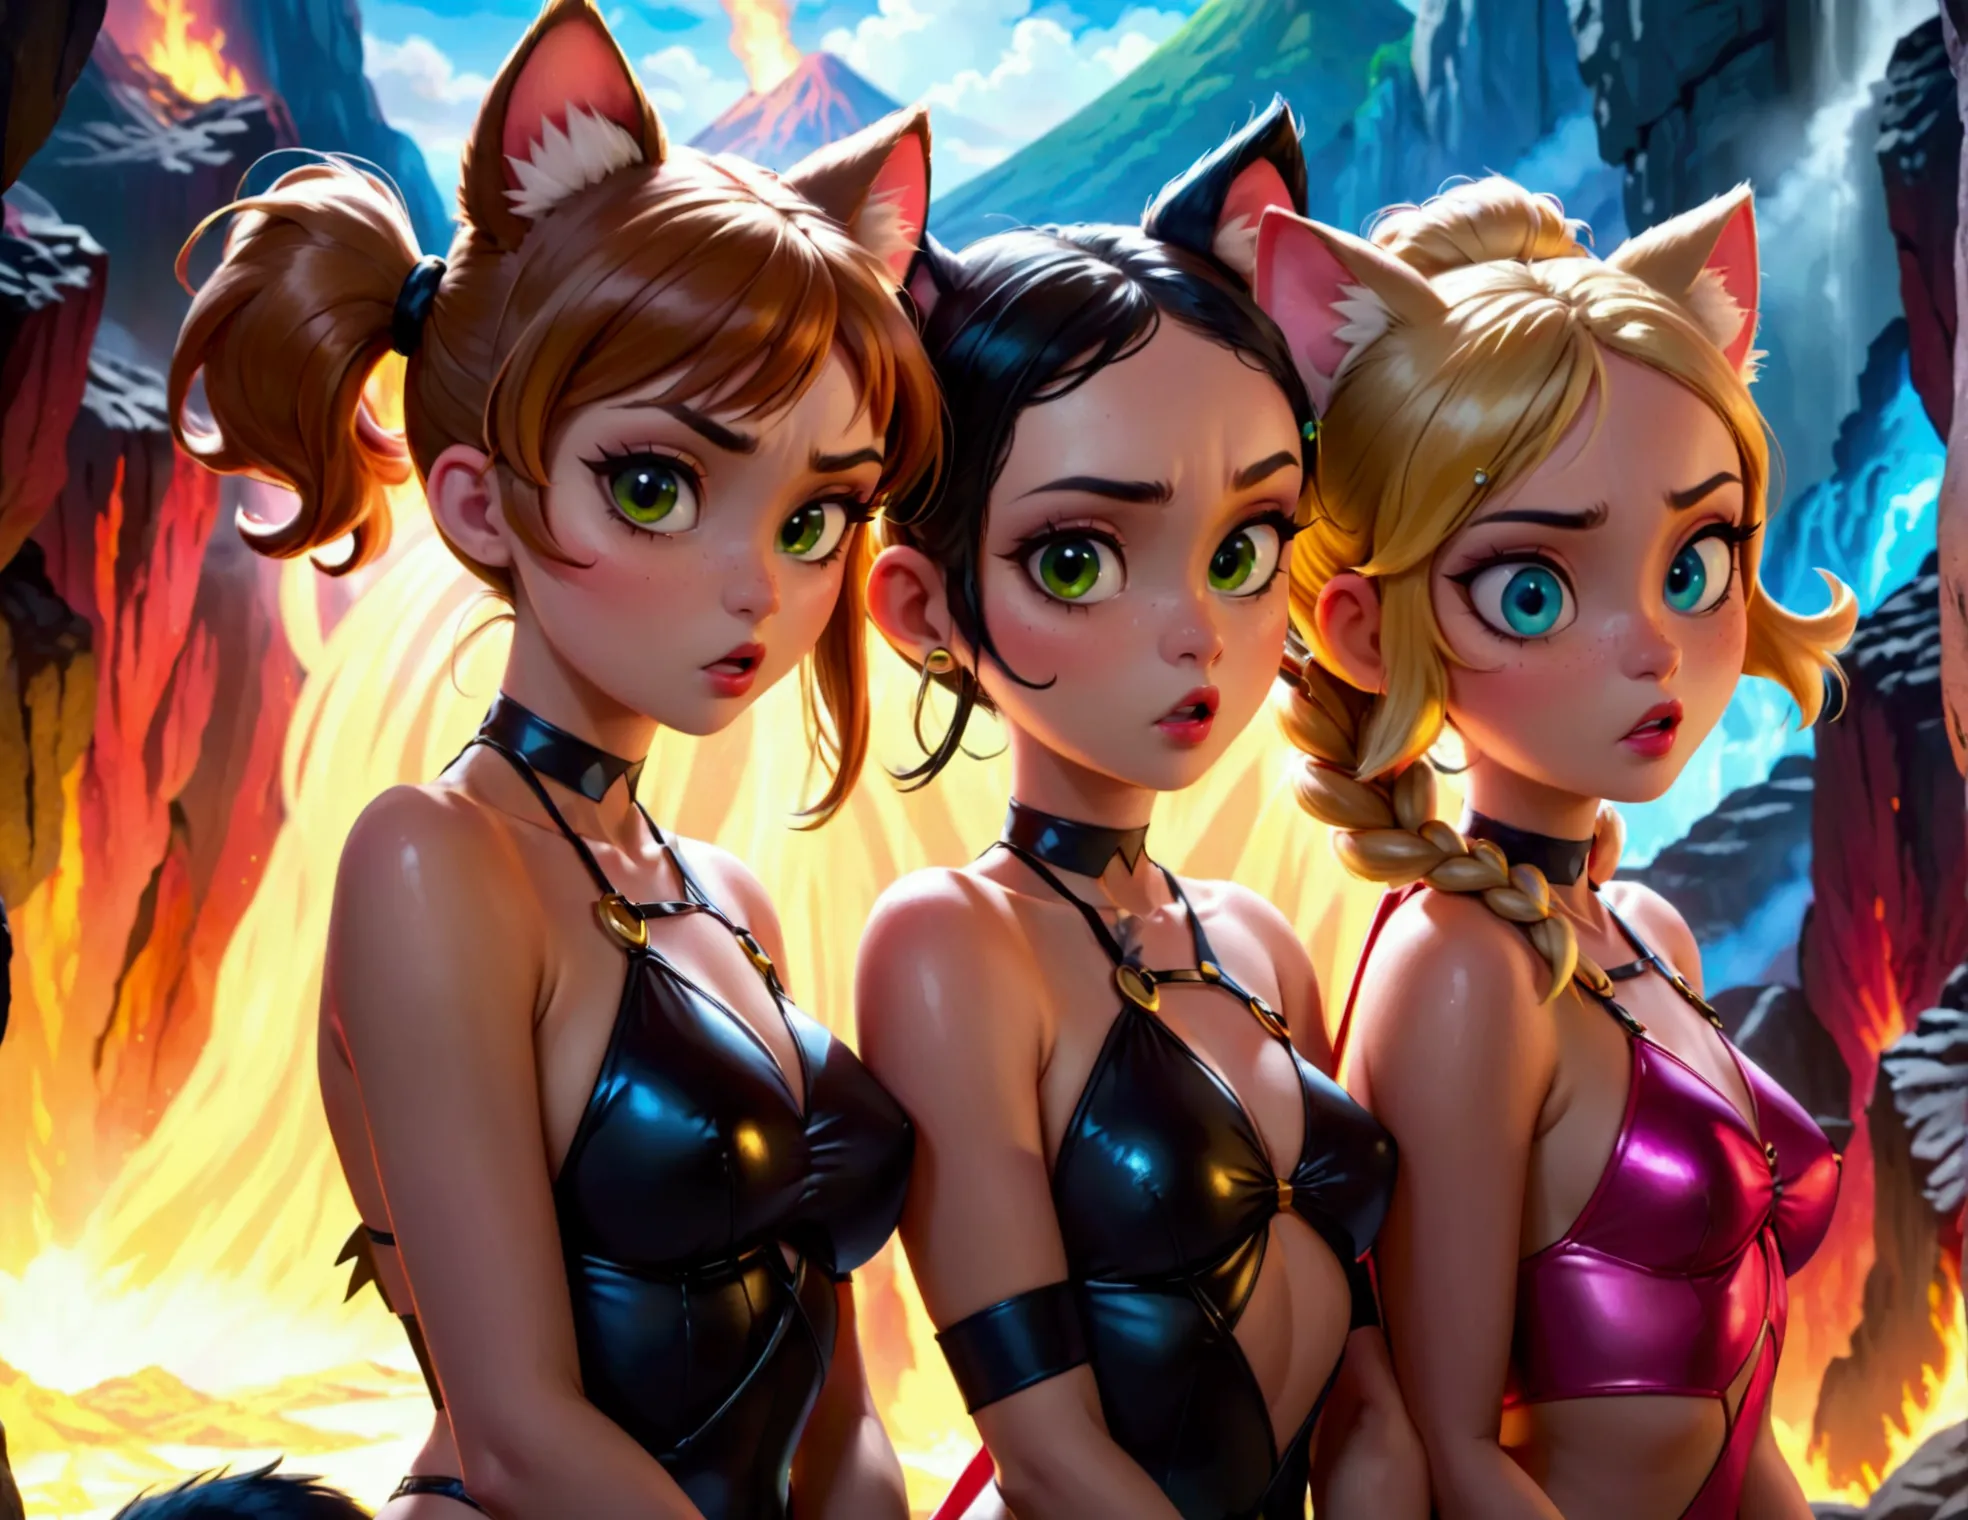 realistic powerpuff girls, 3 adult women, catgirl costumes, cat ears, cat tails, cat hair braids, nude bodies, orgy scene, insid...